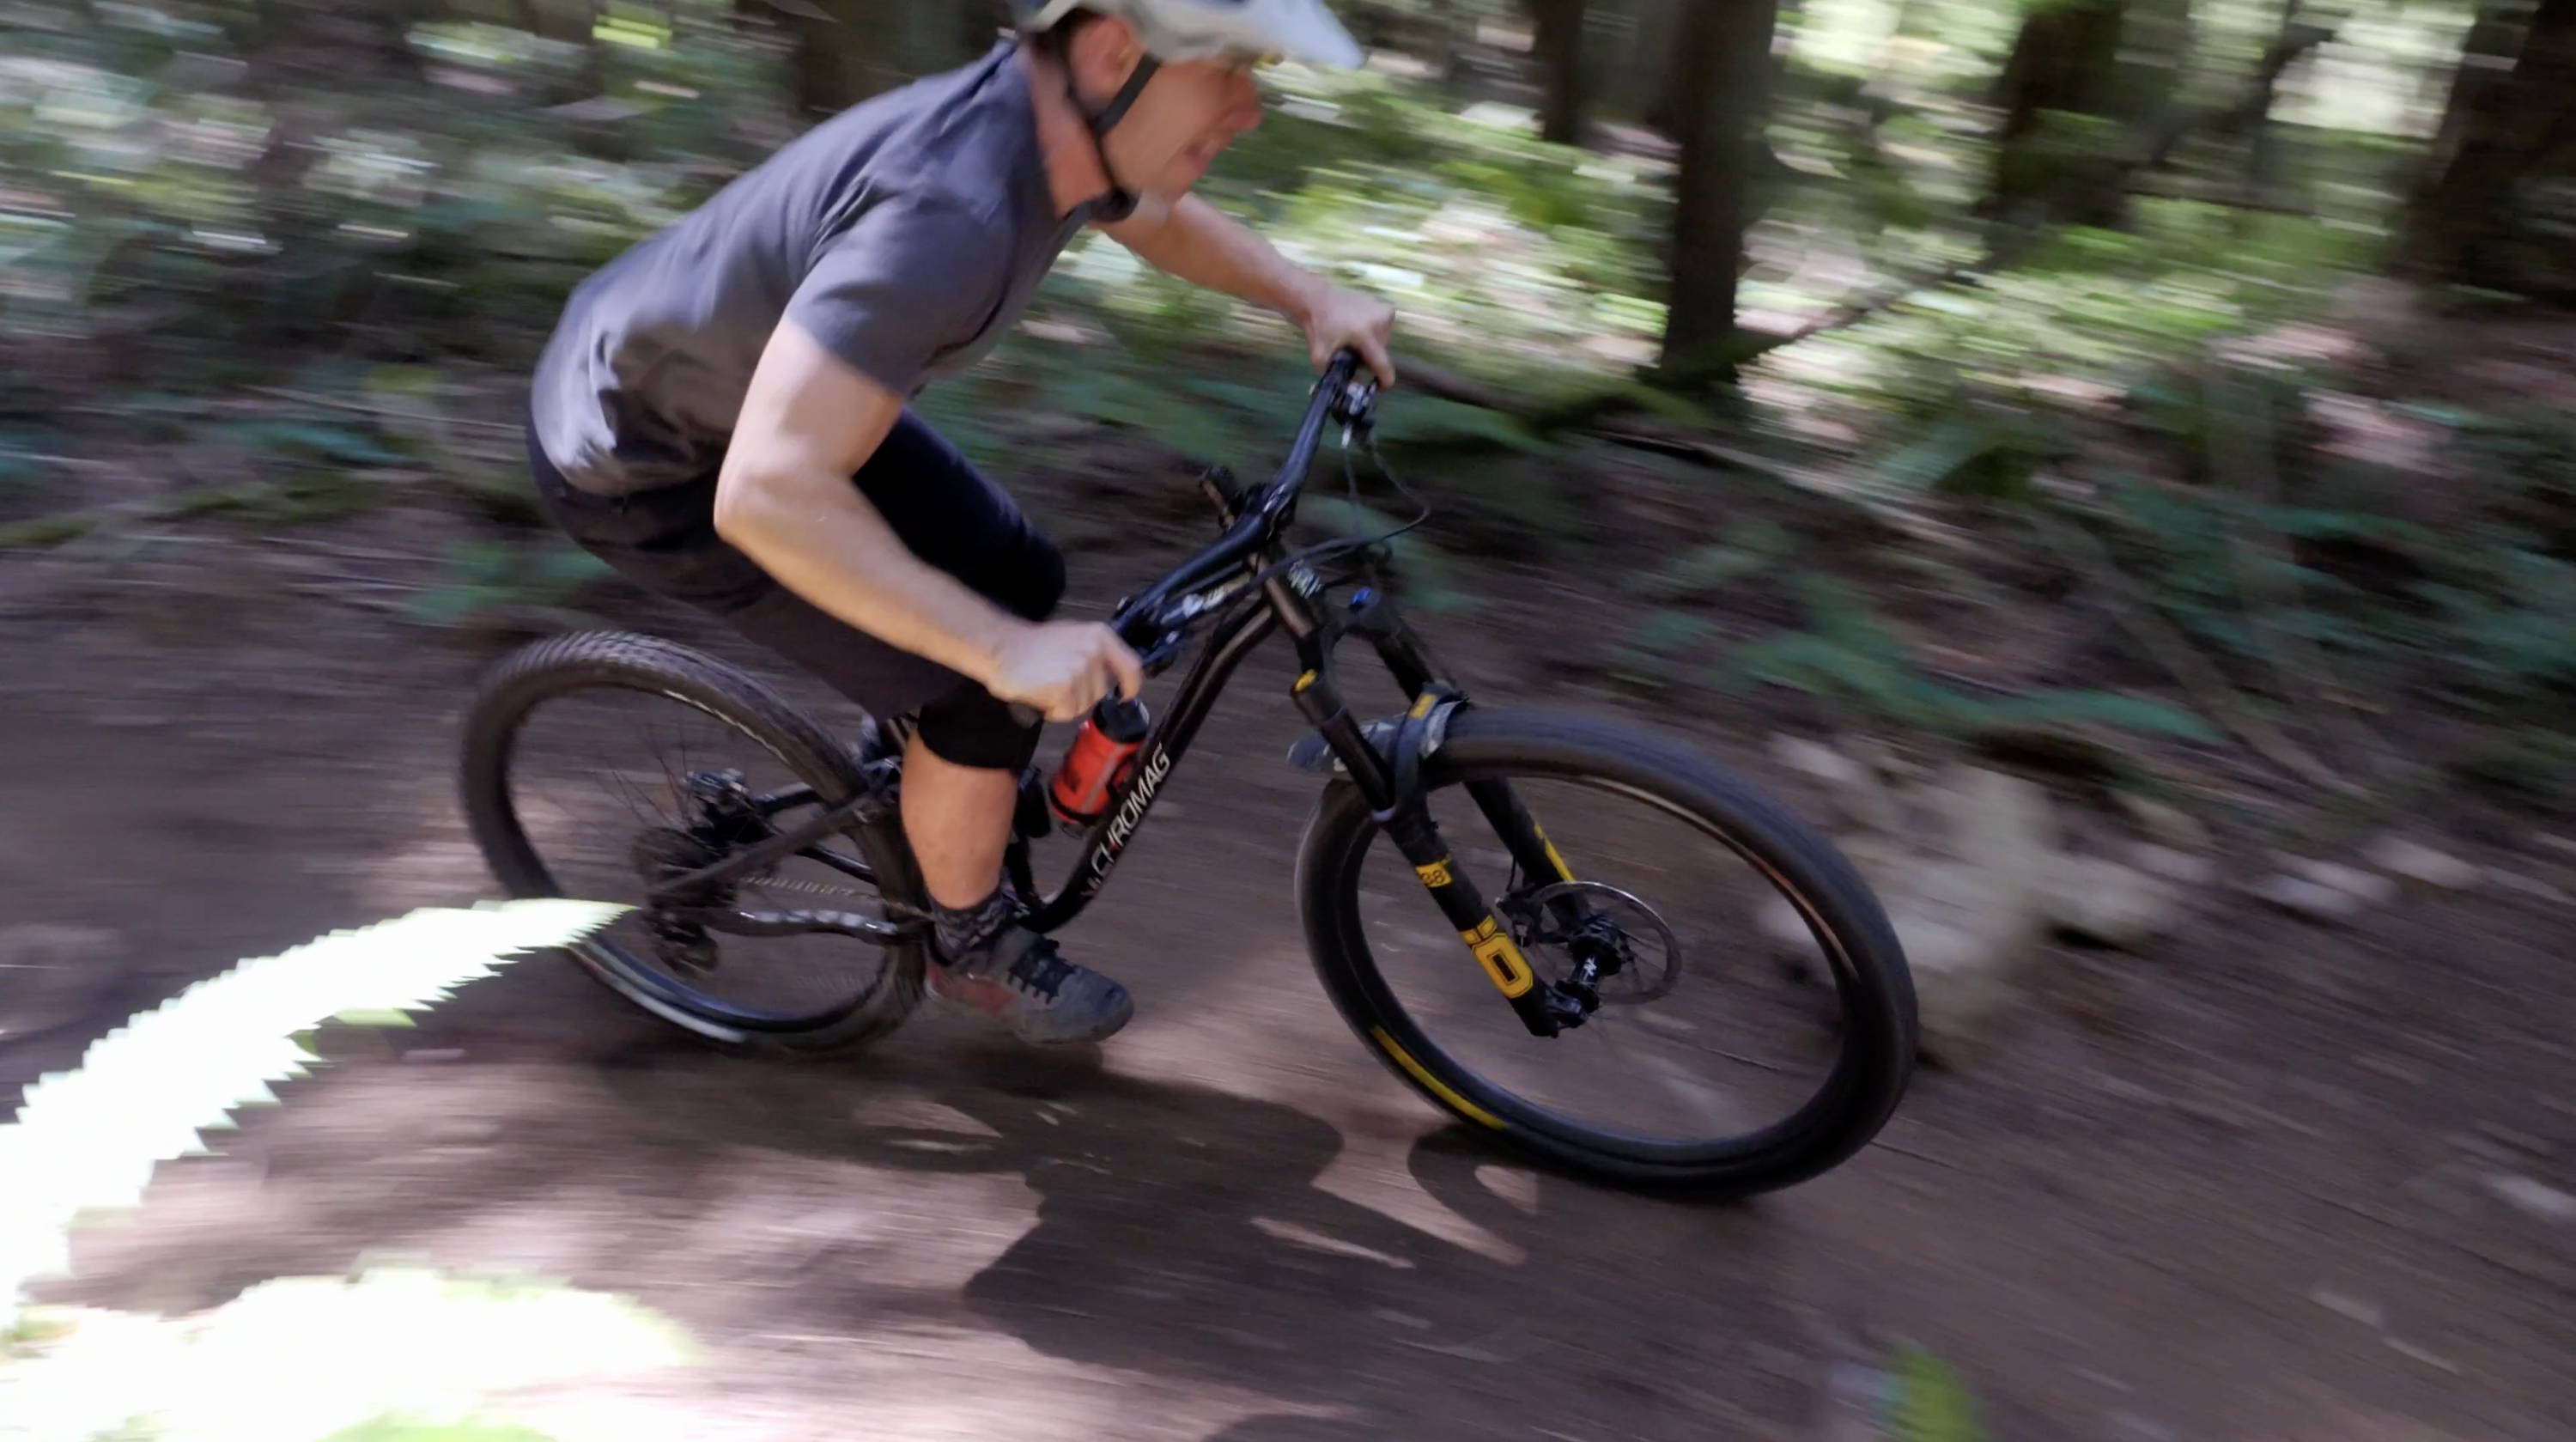 mountain biker riding through bellingham woods on chromag full suspension bike with ohlins fork